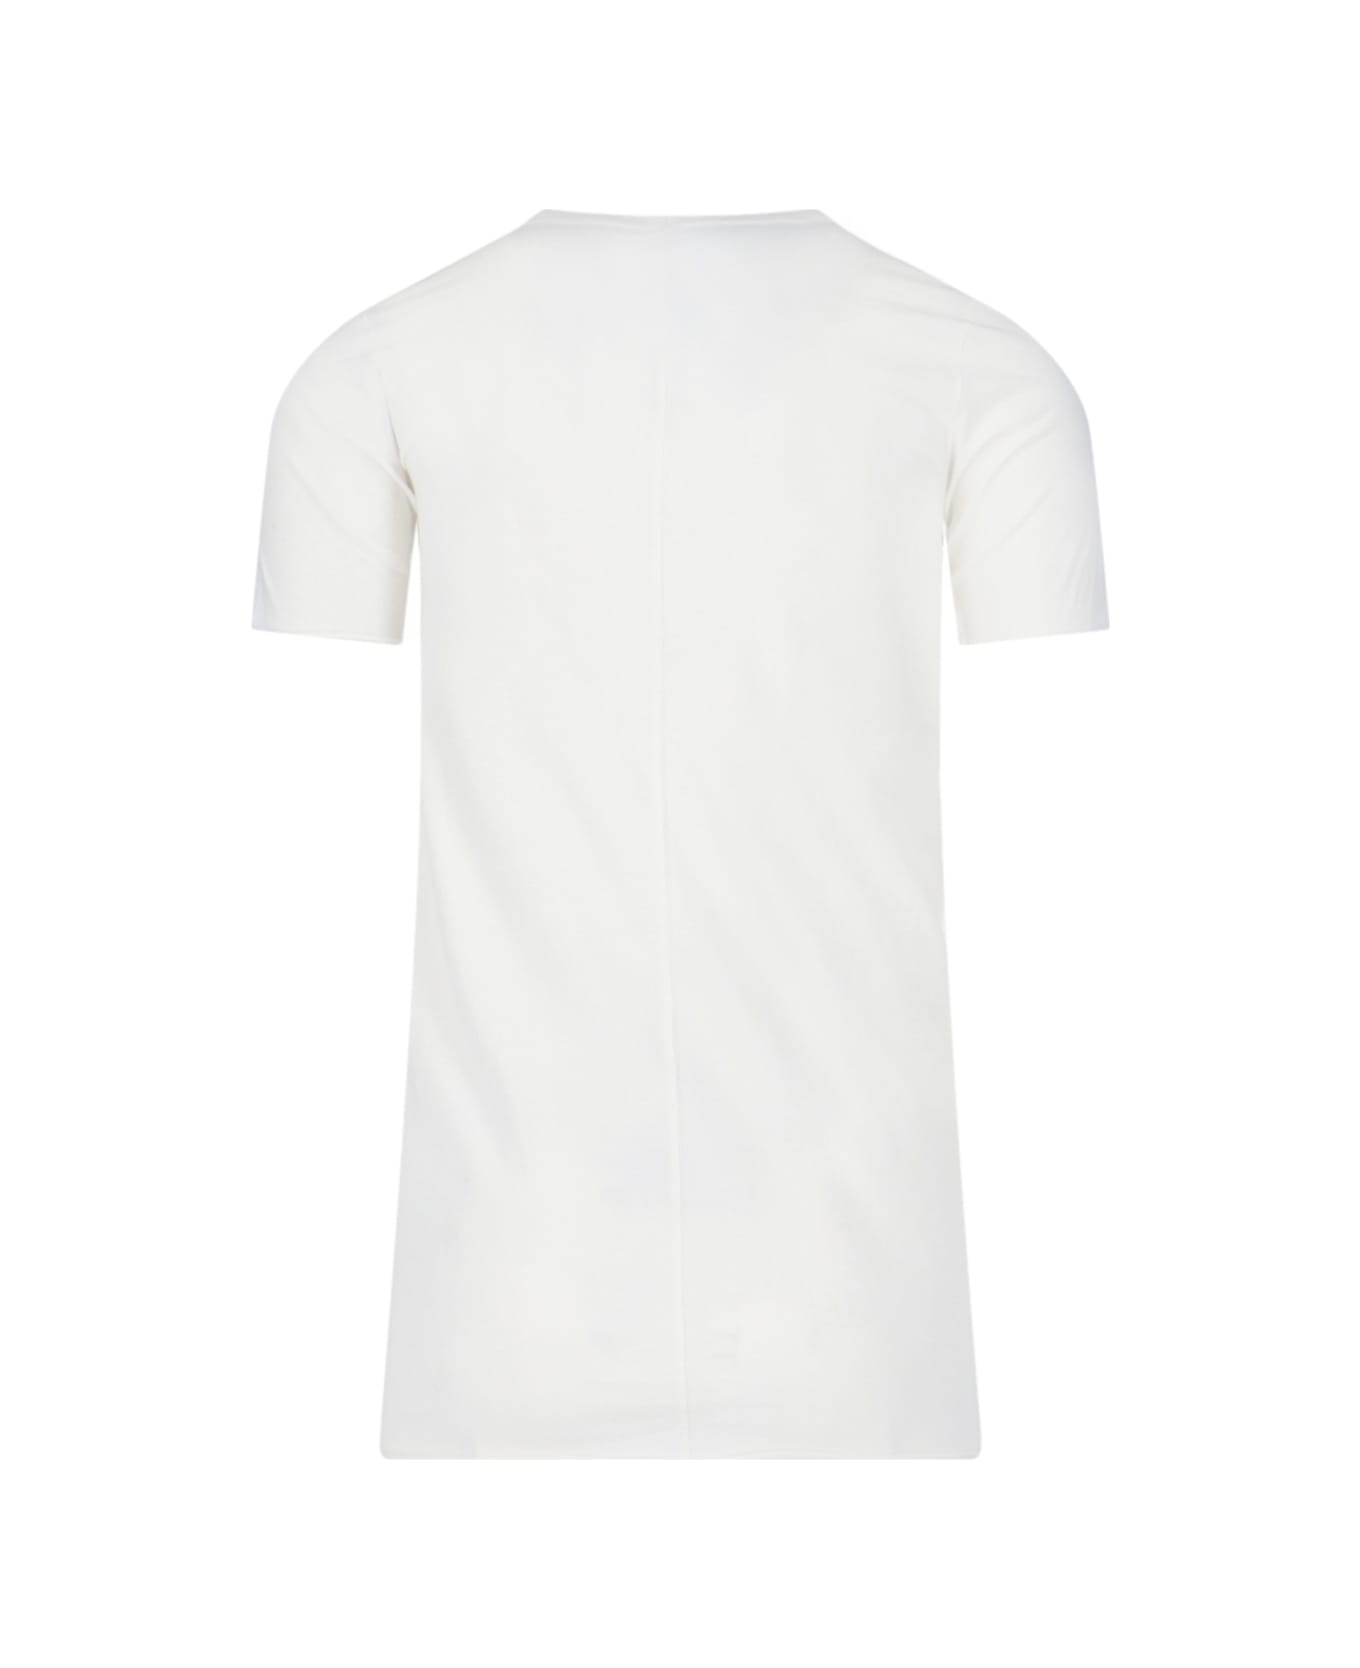 Rick Owens T-shirt - White